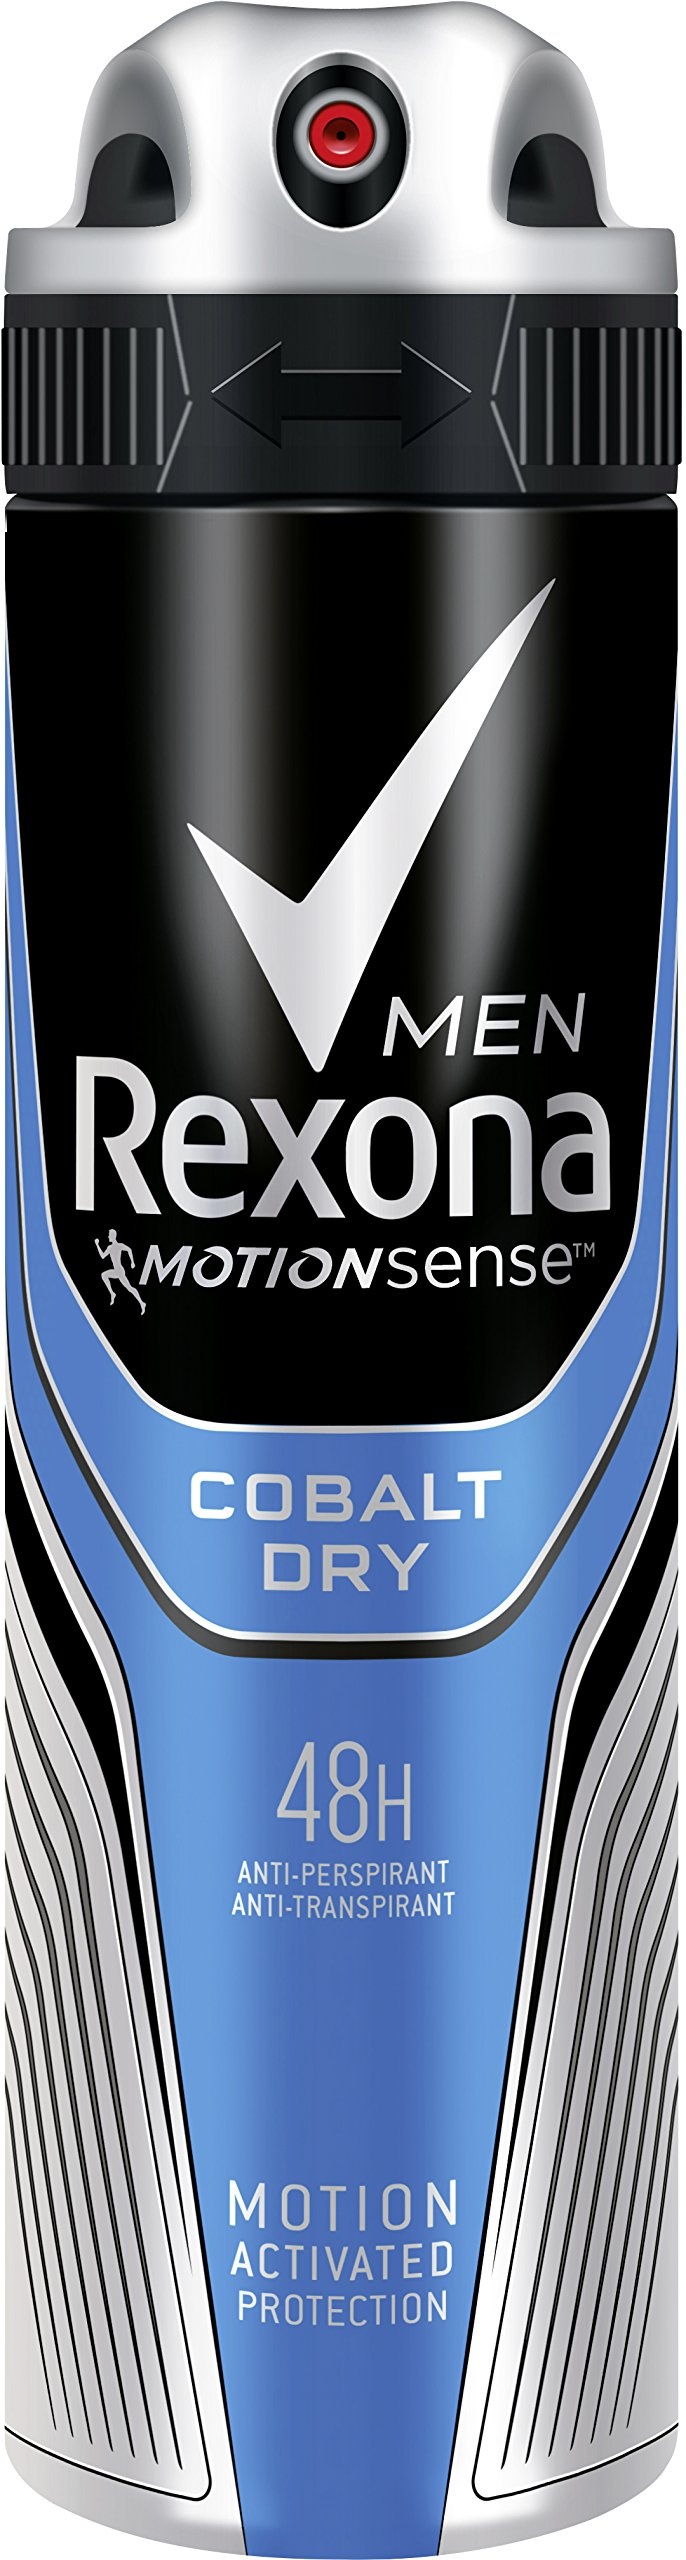 rexona men cobalt